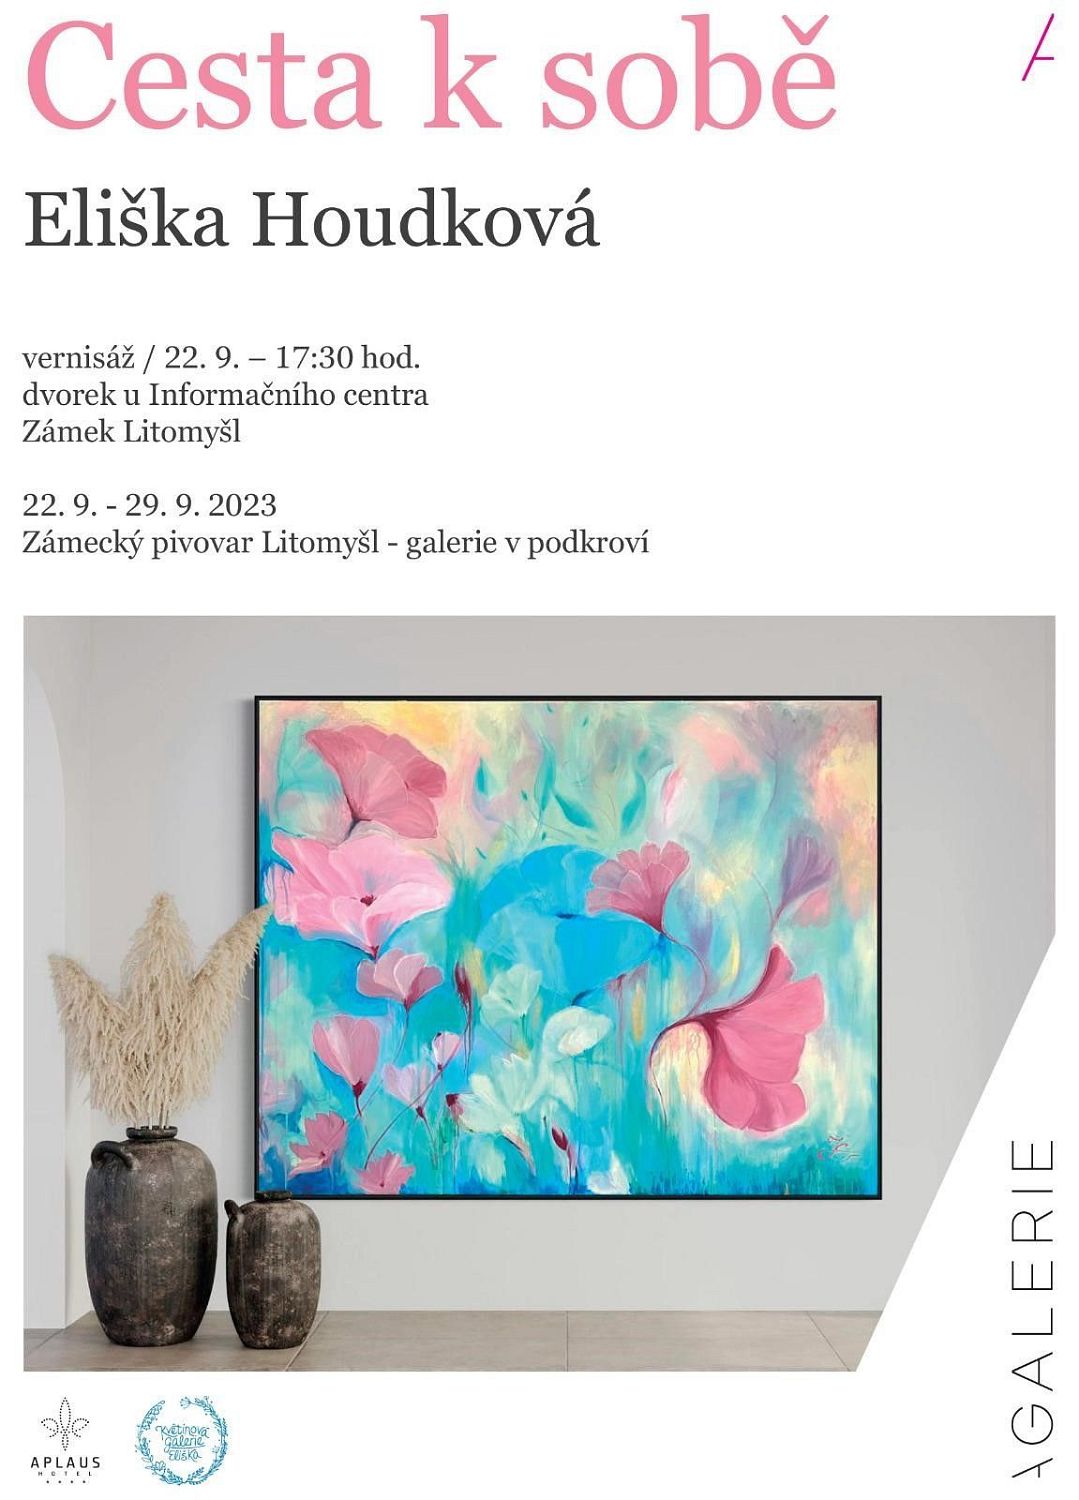 Eliška Houdková: The way to yourself